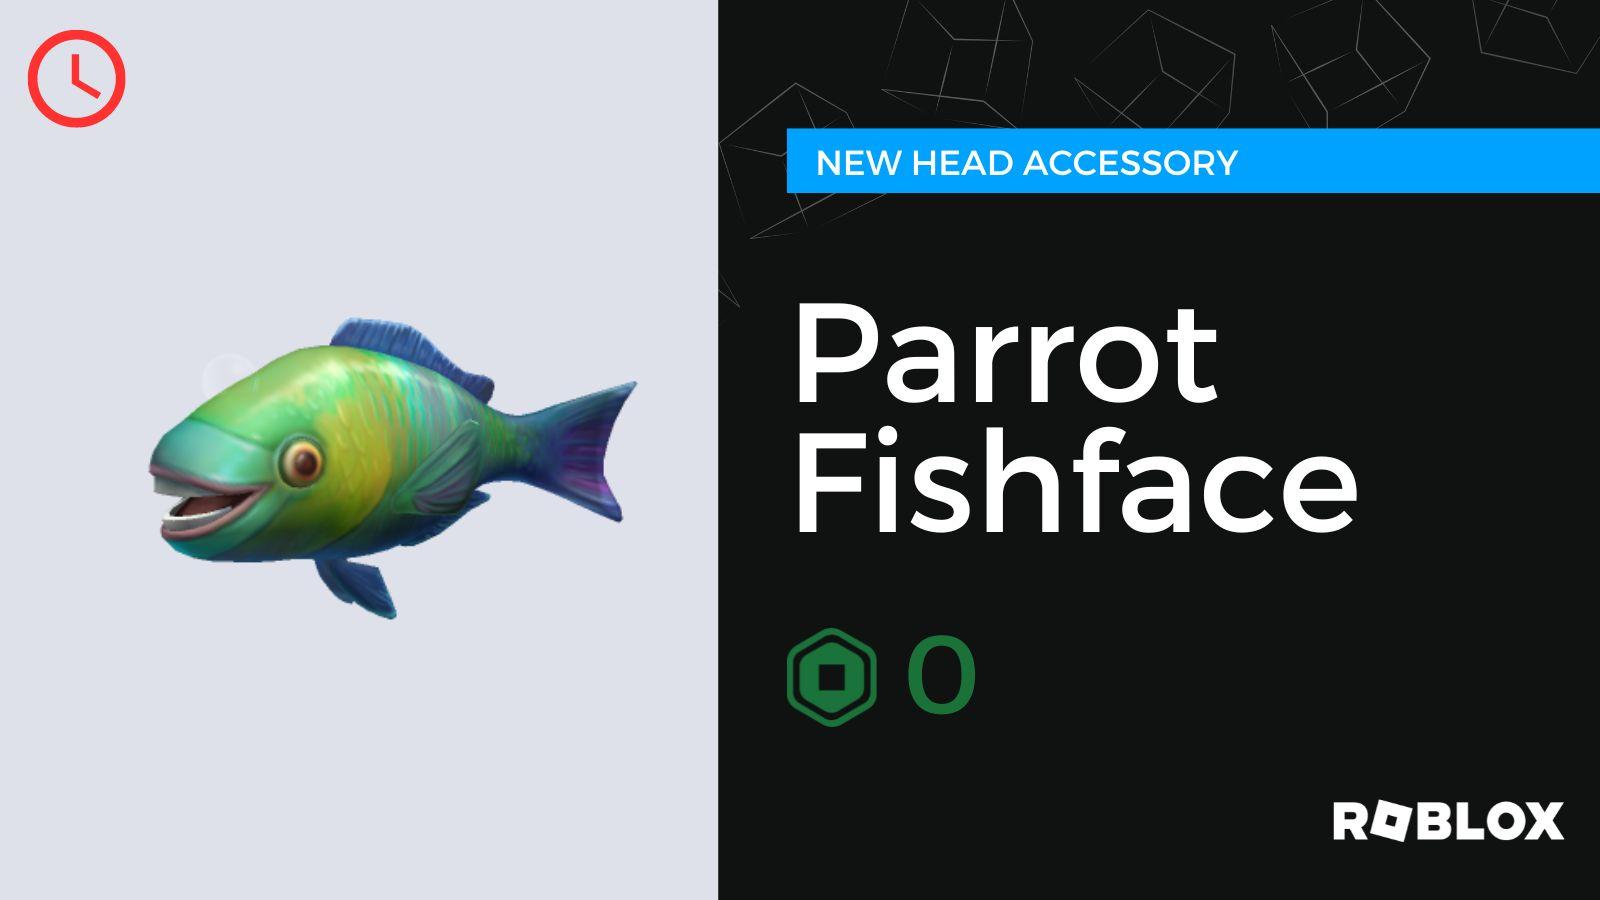 Parrot Fishface Head Accessory in Roblox